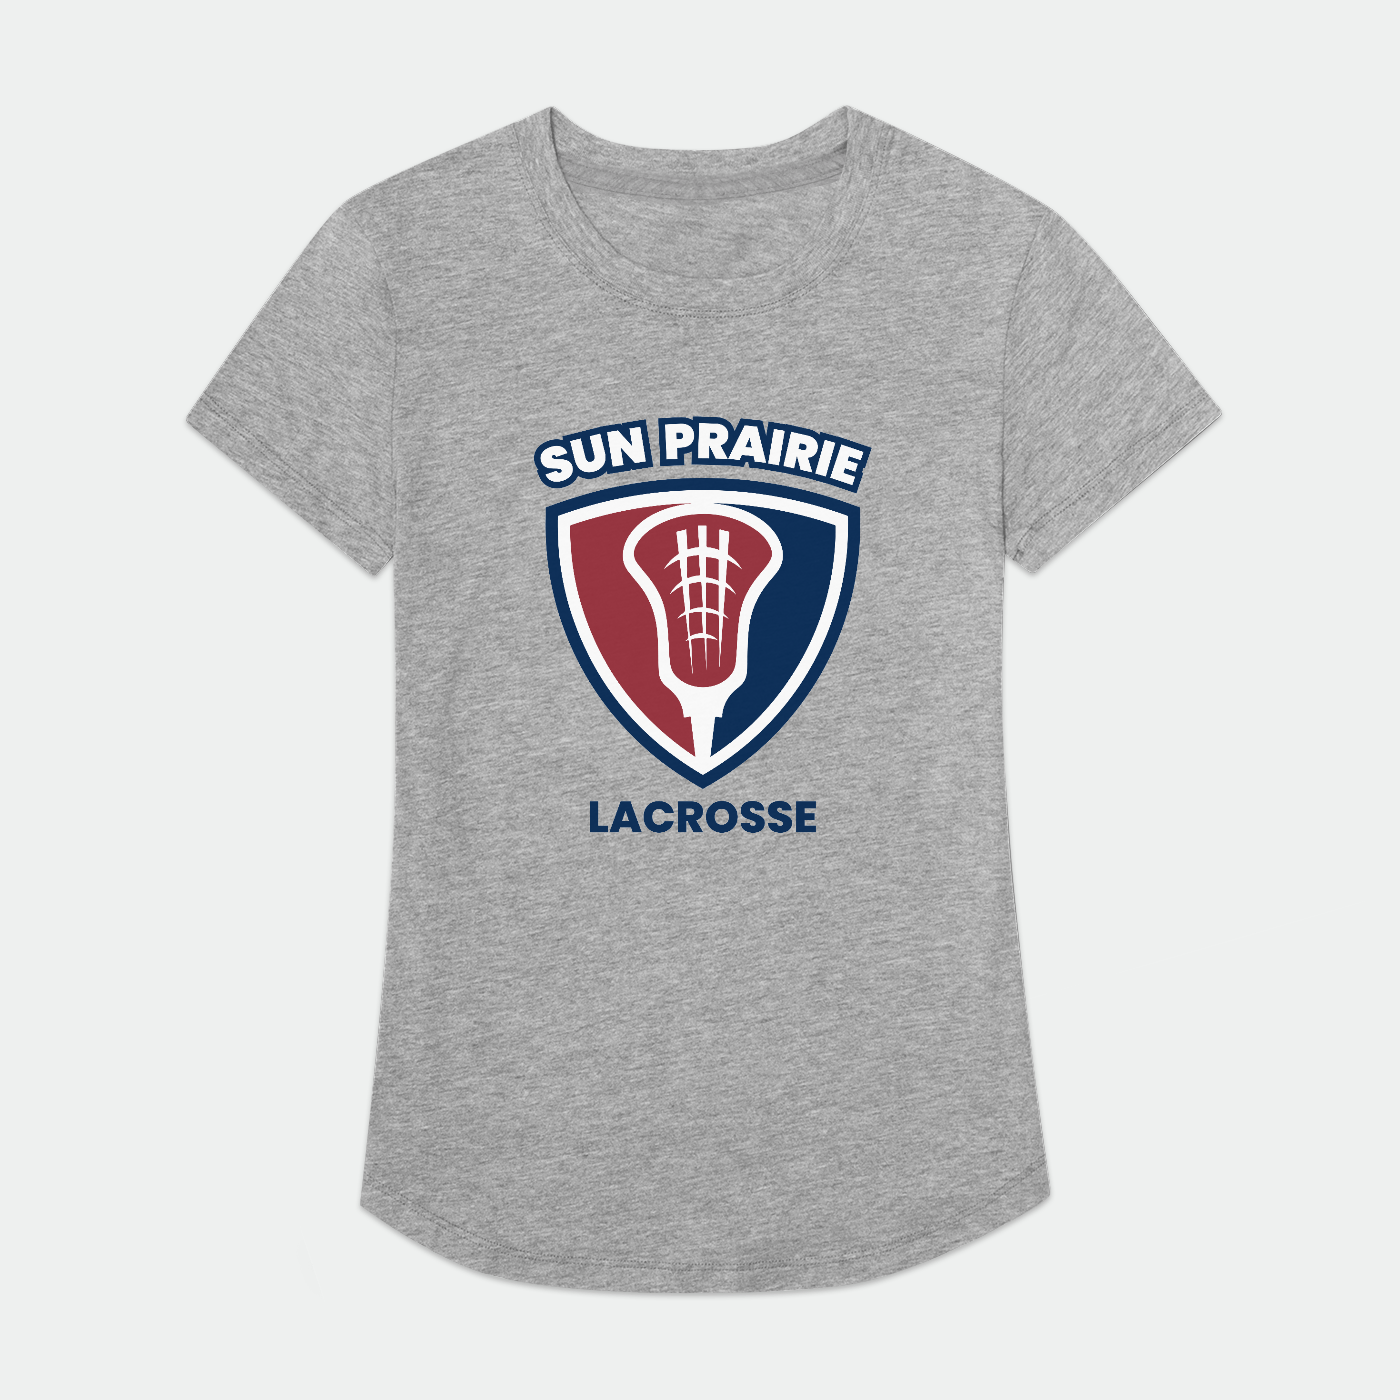 Sun Prairie Youth Lacrosse Adult Women's Sport T-Shirt Signature Lacrosse